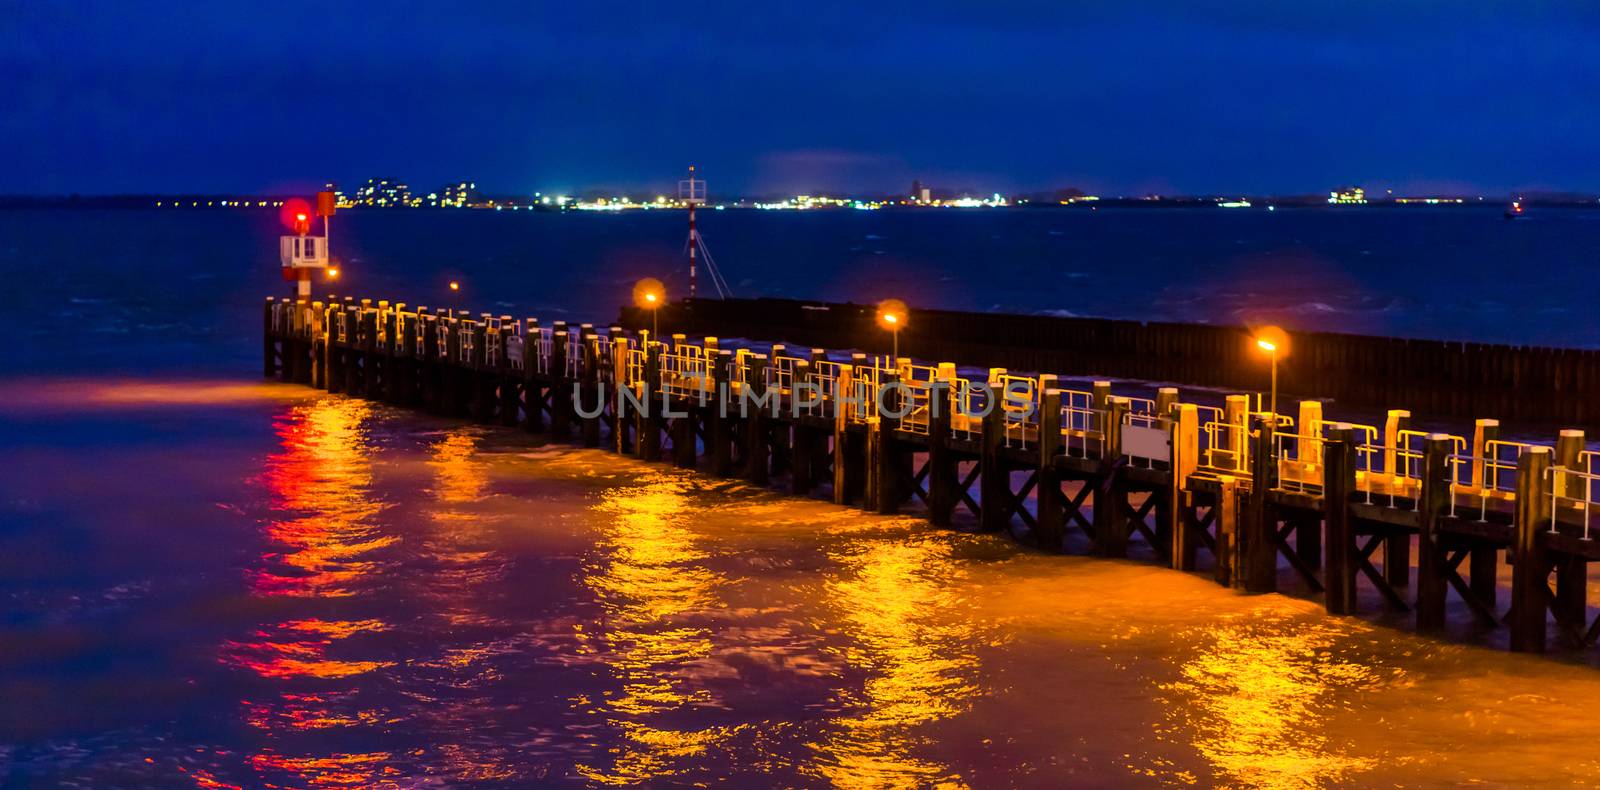 The pier jetty of vlissingen illuminated at night, lights reflecting in the ocean, Zeeland, the netherlands by charlottebleijenberg